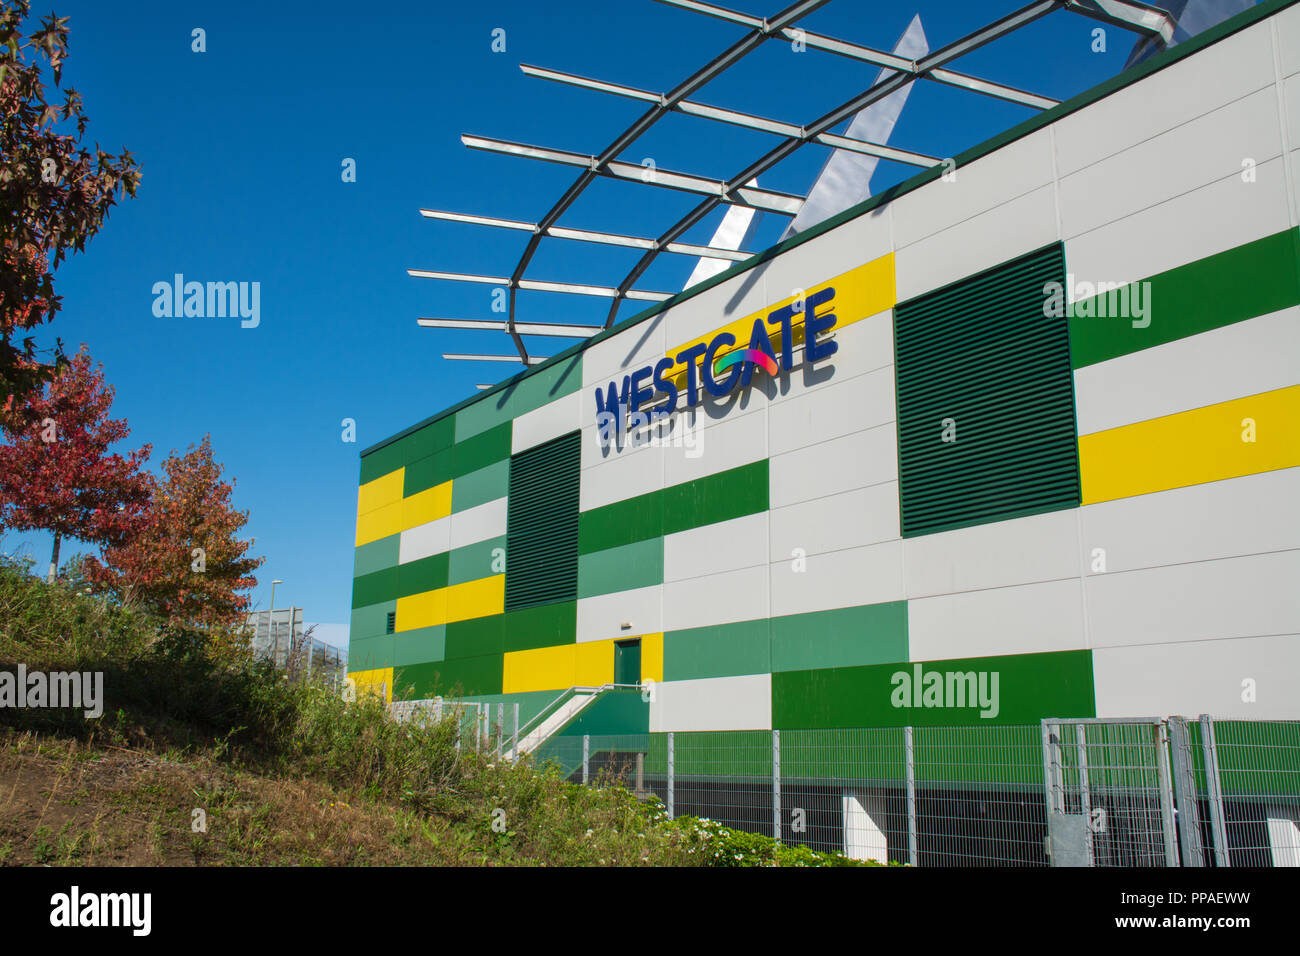 Westgate Retail and Leisure Park, Aldershot, Hampshire, Regno Unito Foto Stock